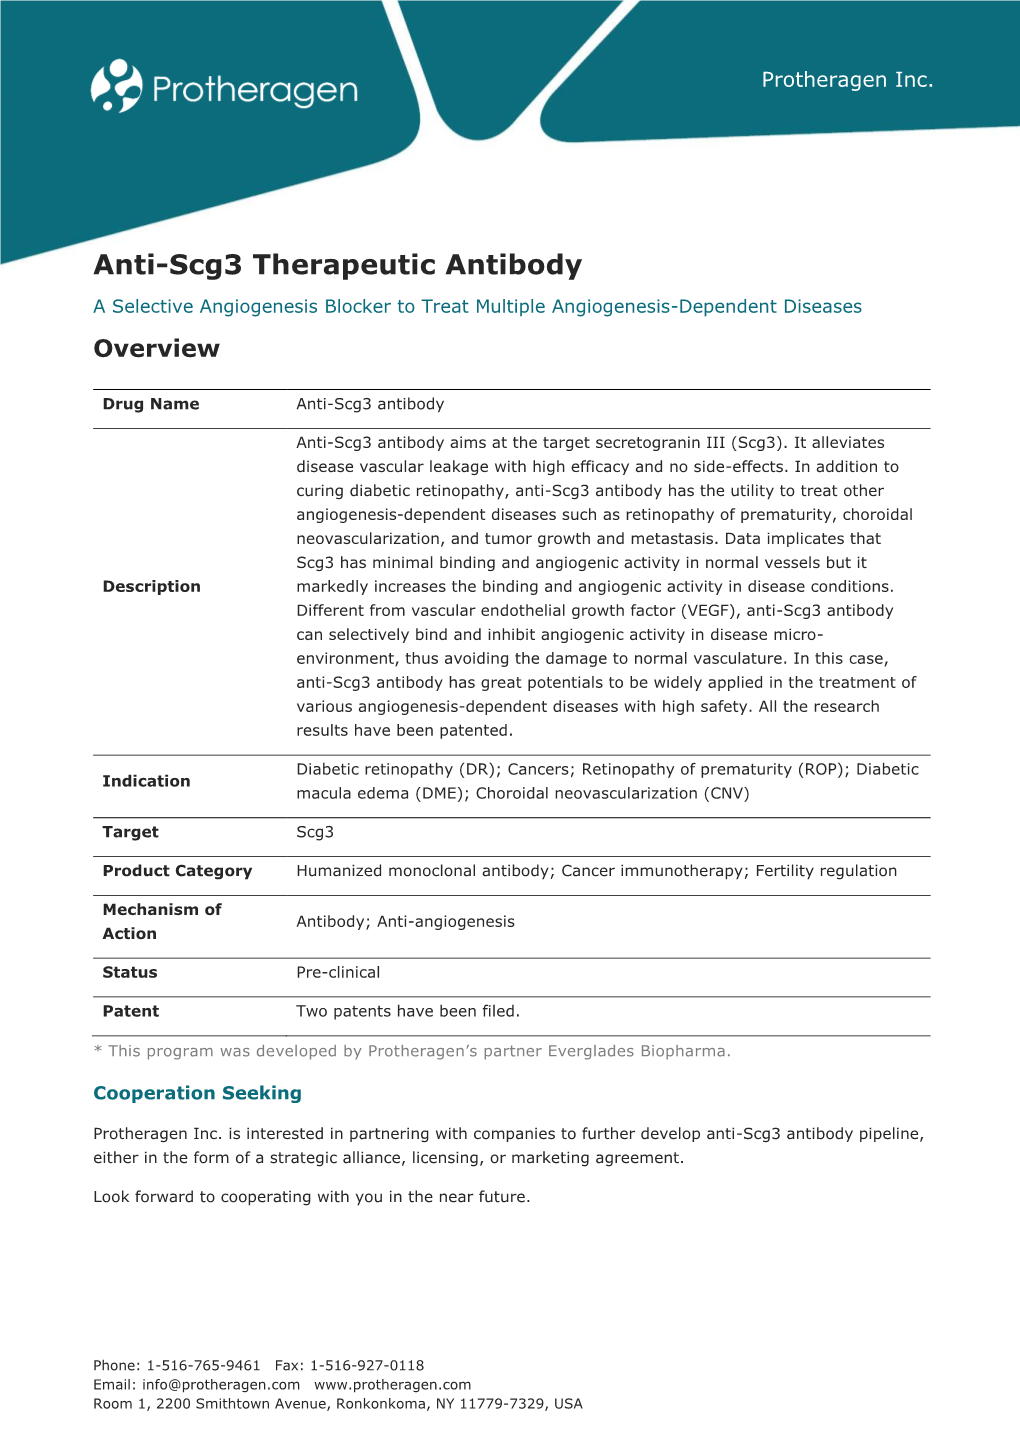 Anti-Scg3 Therapeutic Antibody